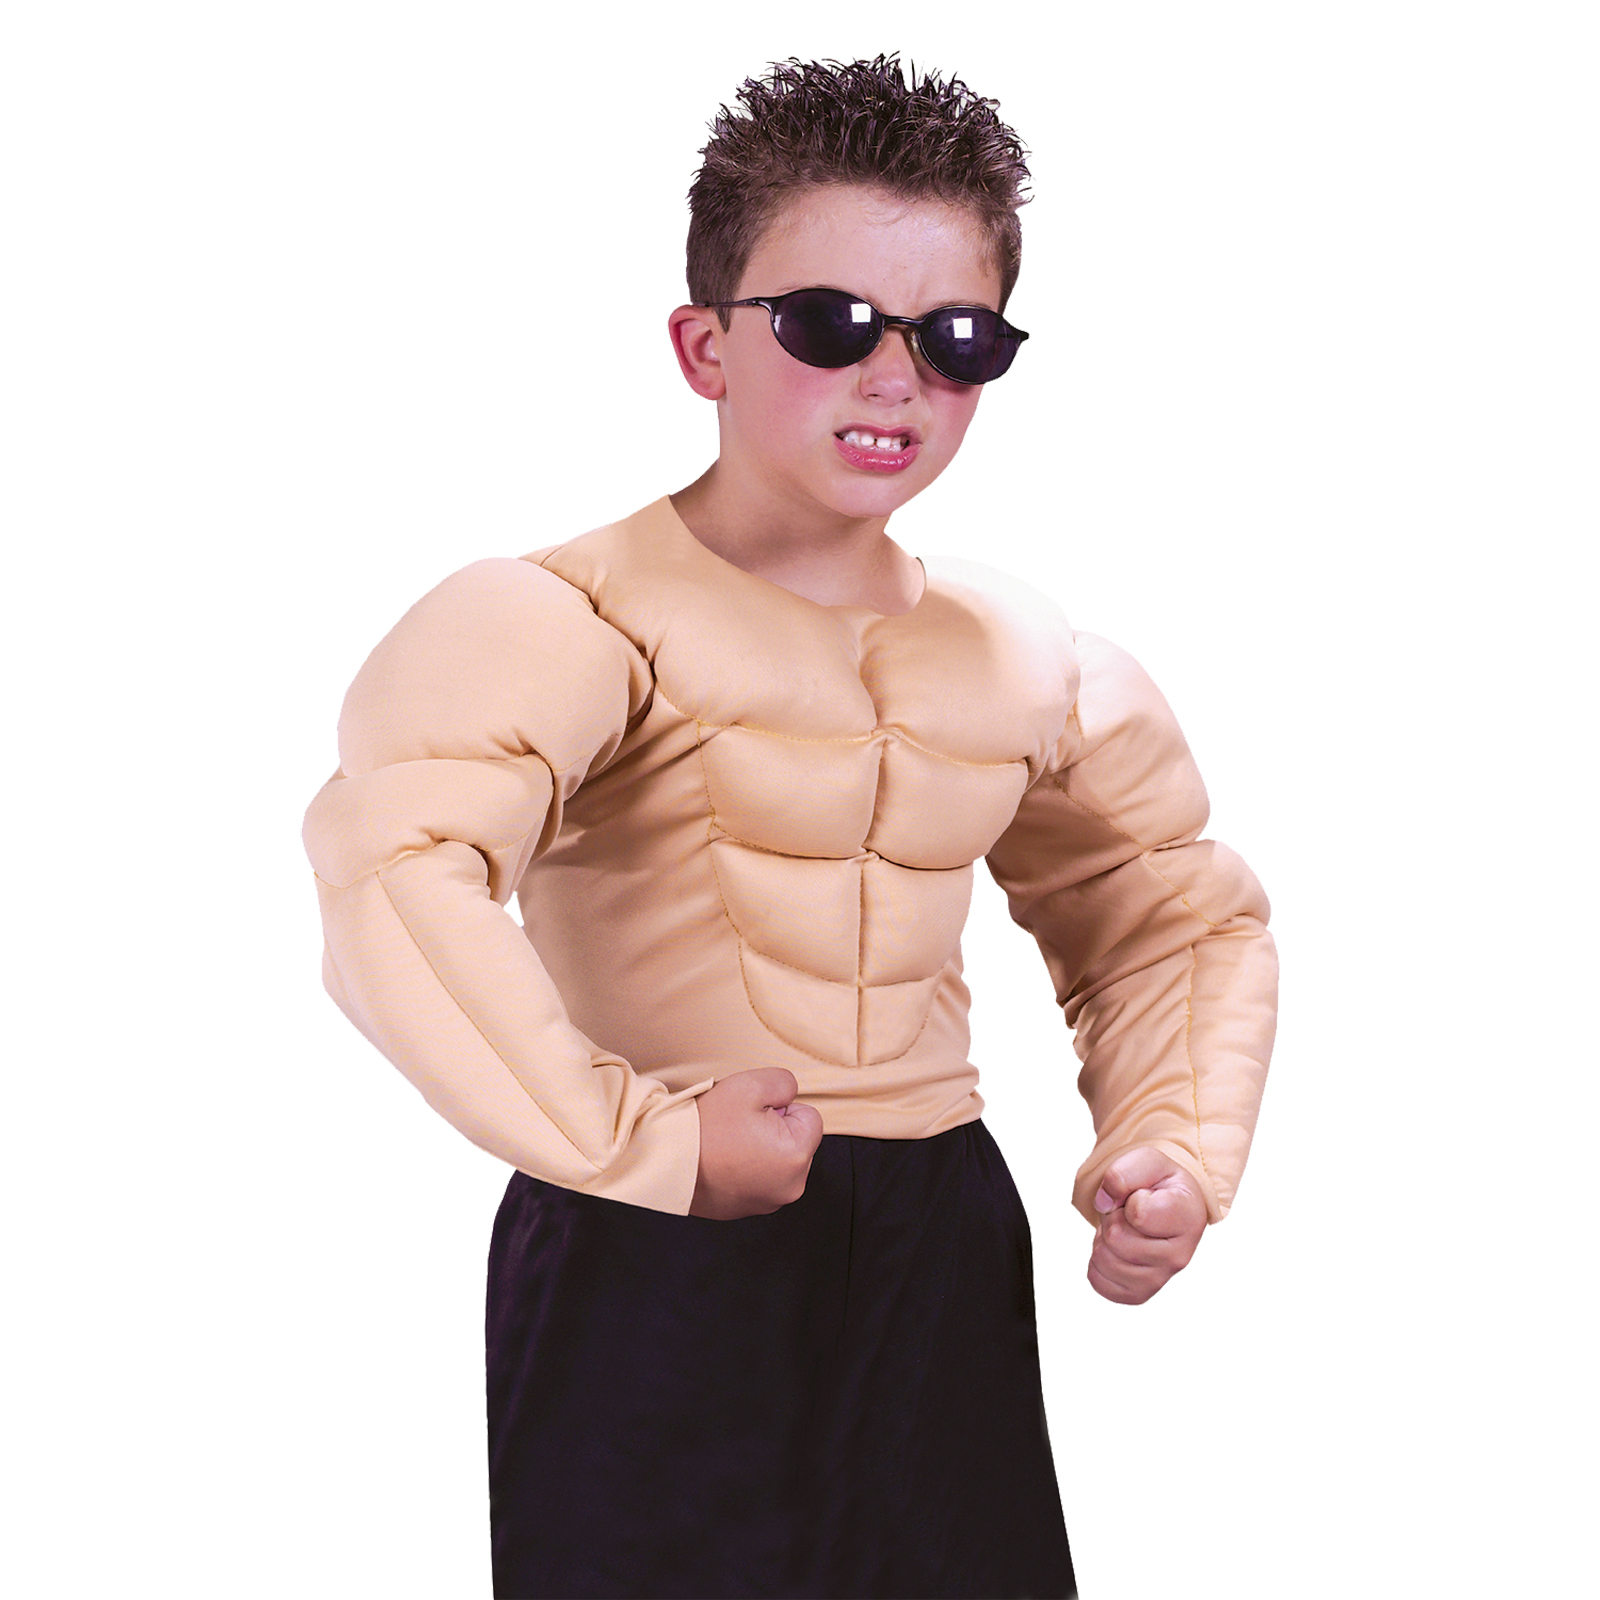 Boys Muscle Shirt Halloween Costume